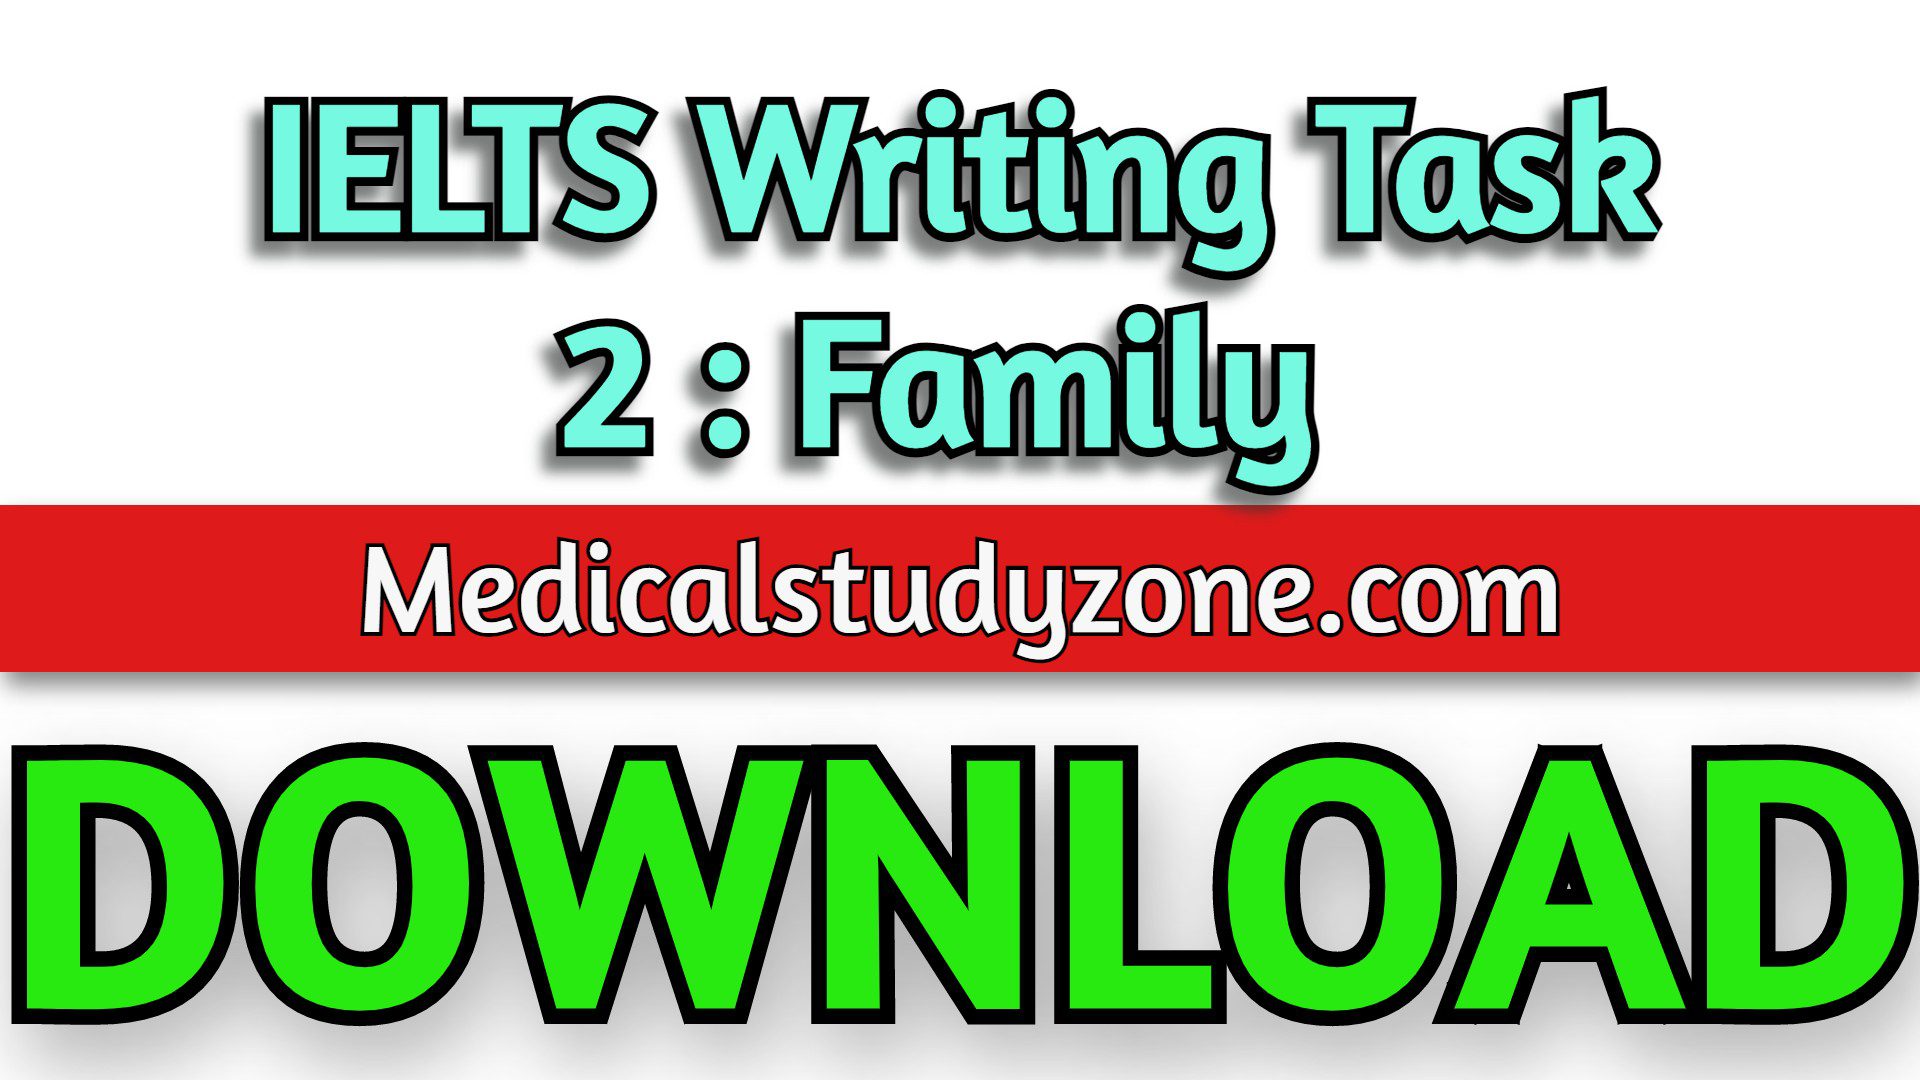 IELTS Writing Task 2 : Family 2021 Free